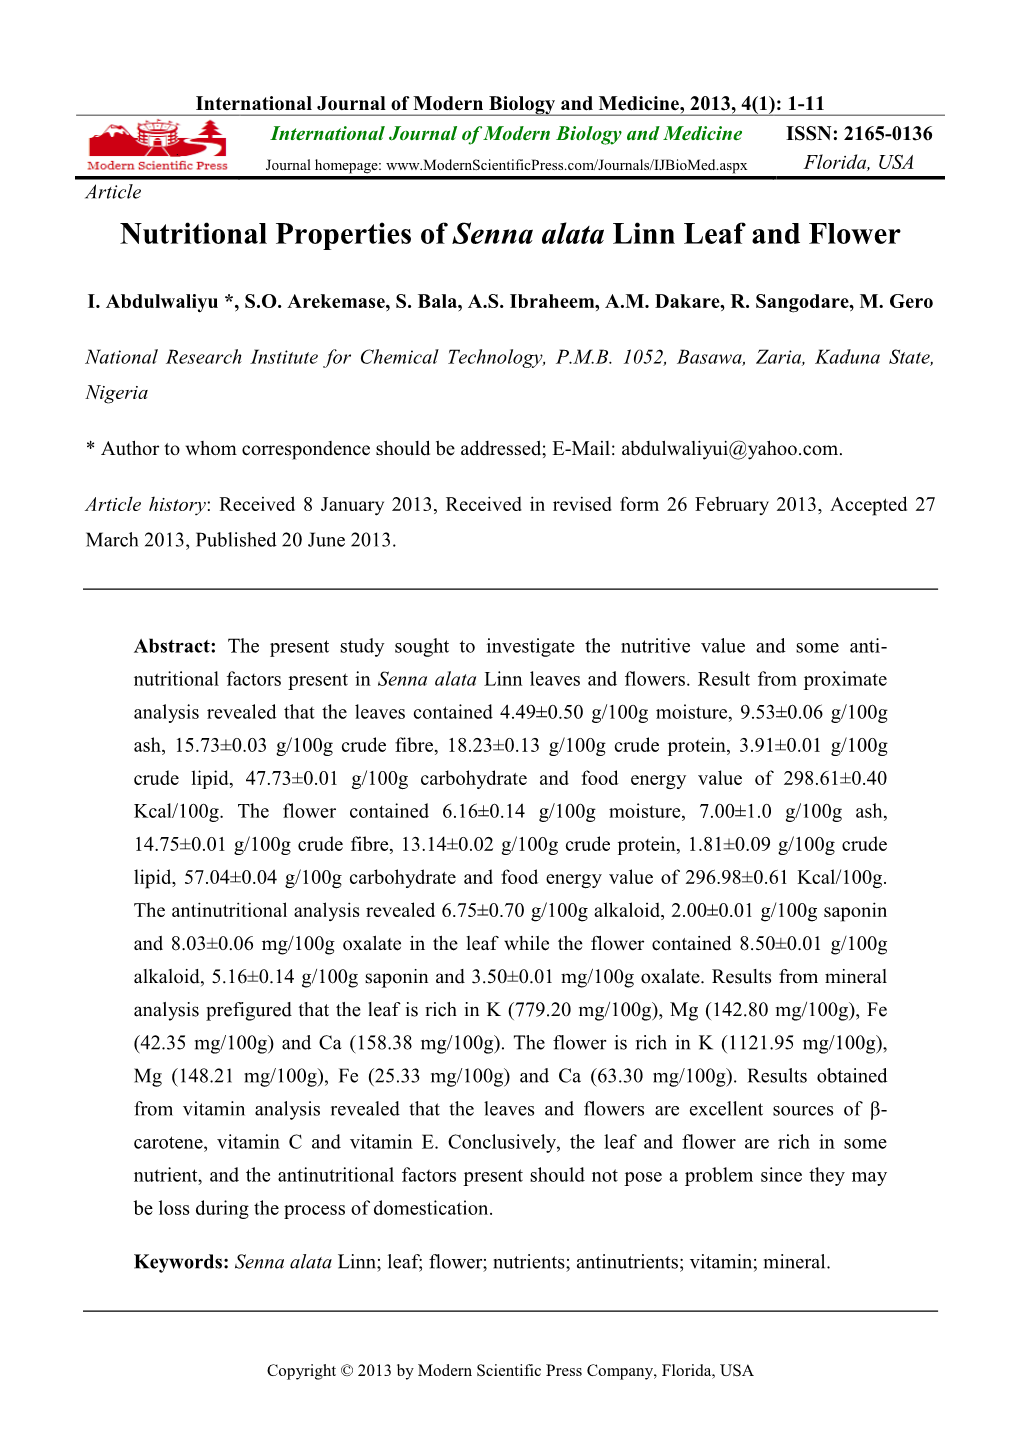 Nutritional Properties of Senna Alata Linn Leaf and Flower